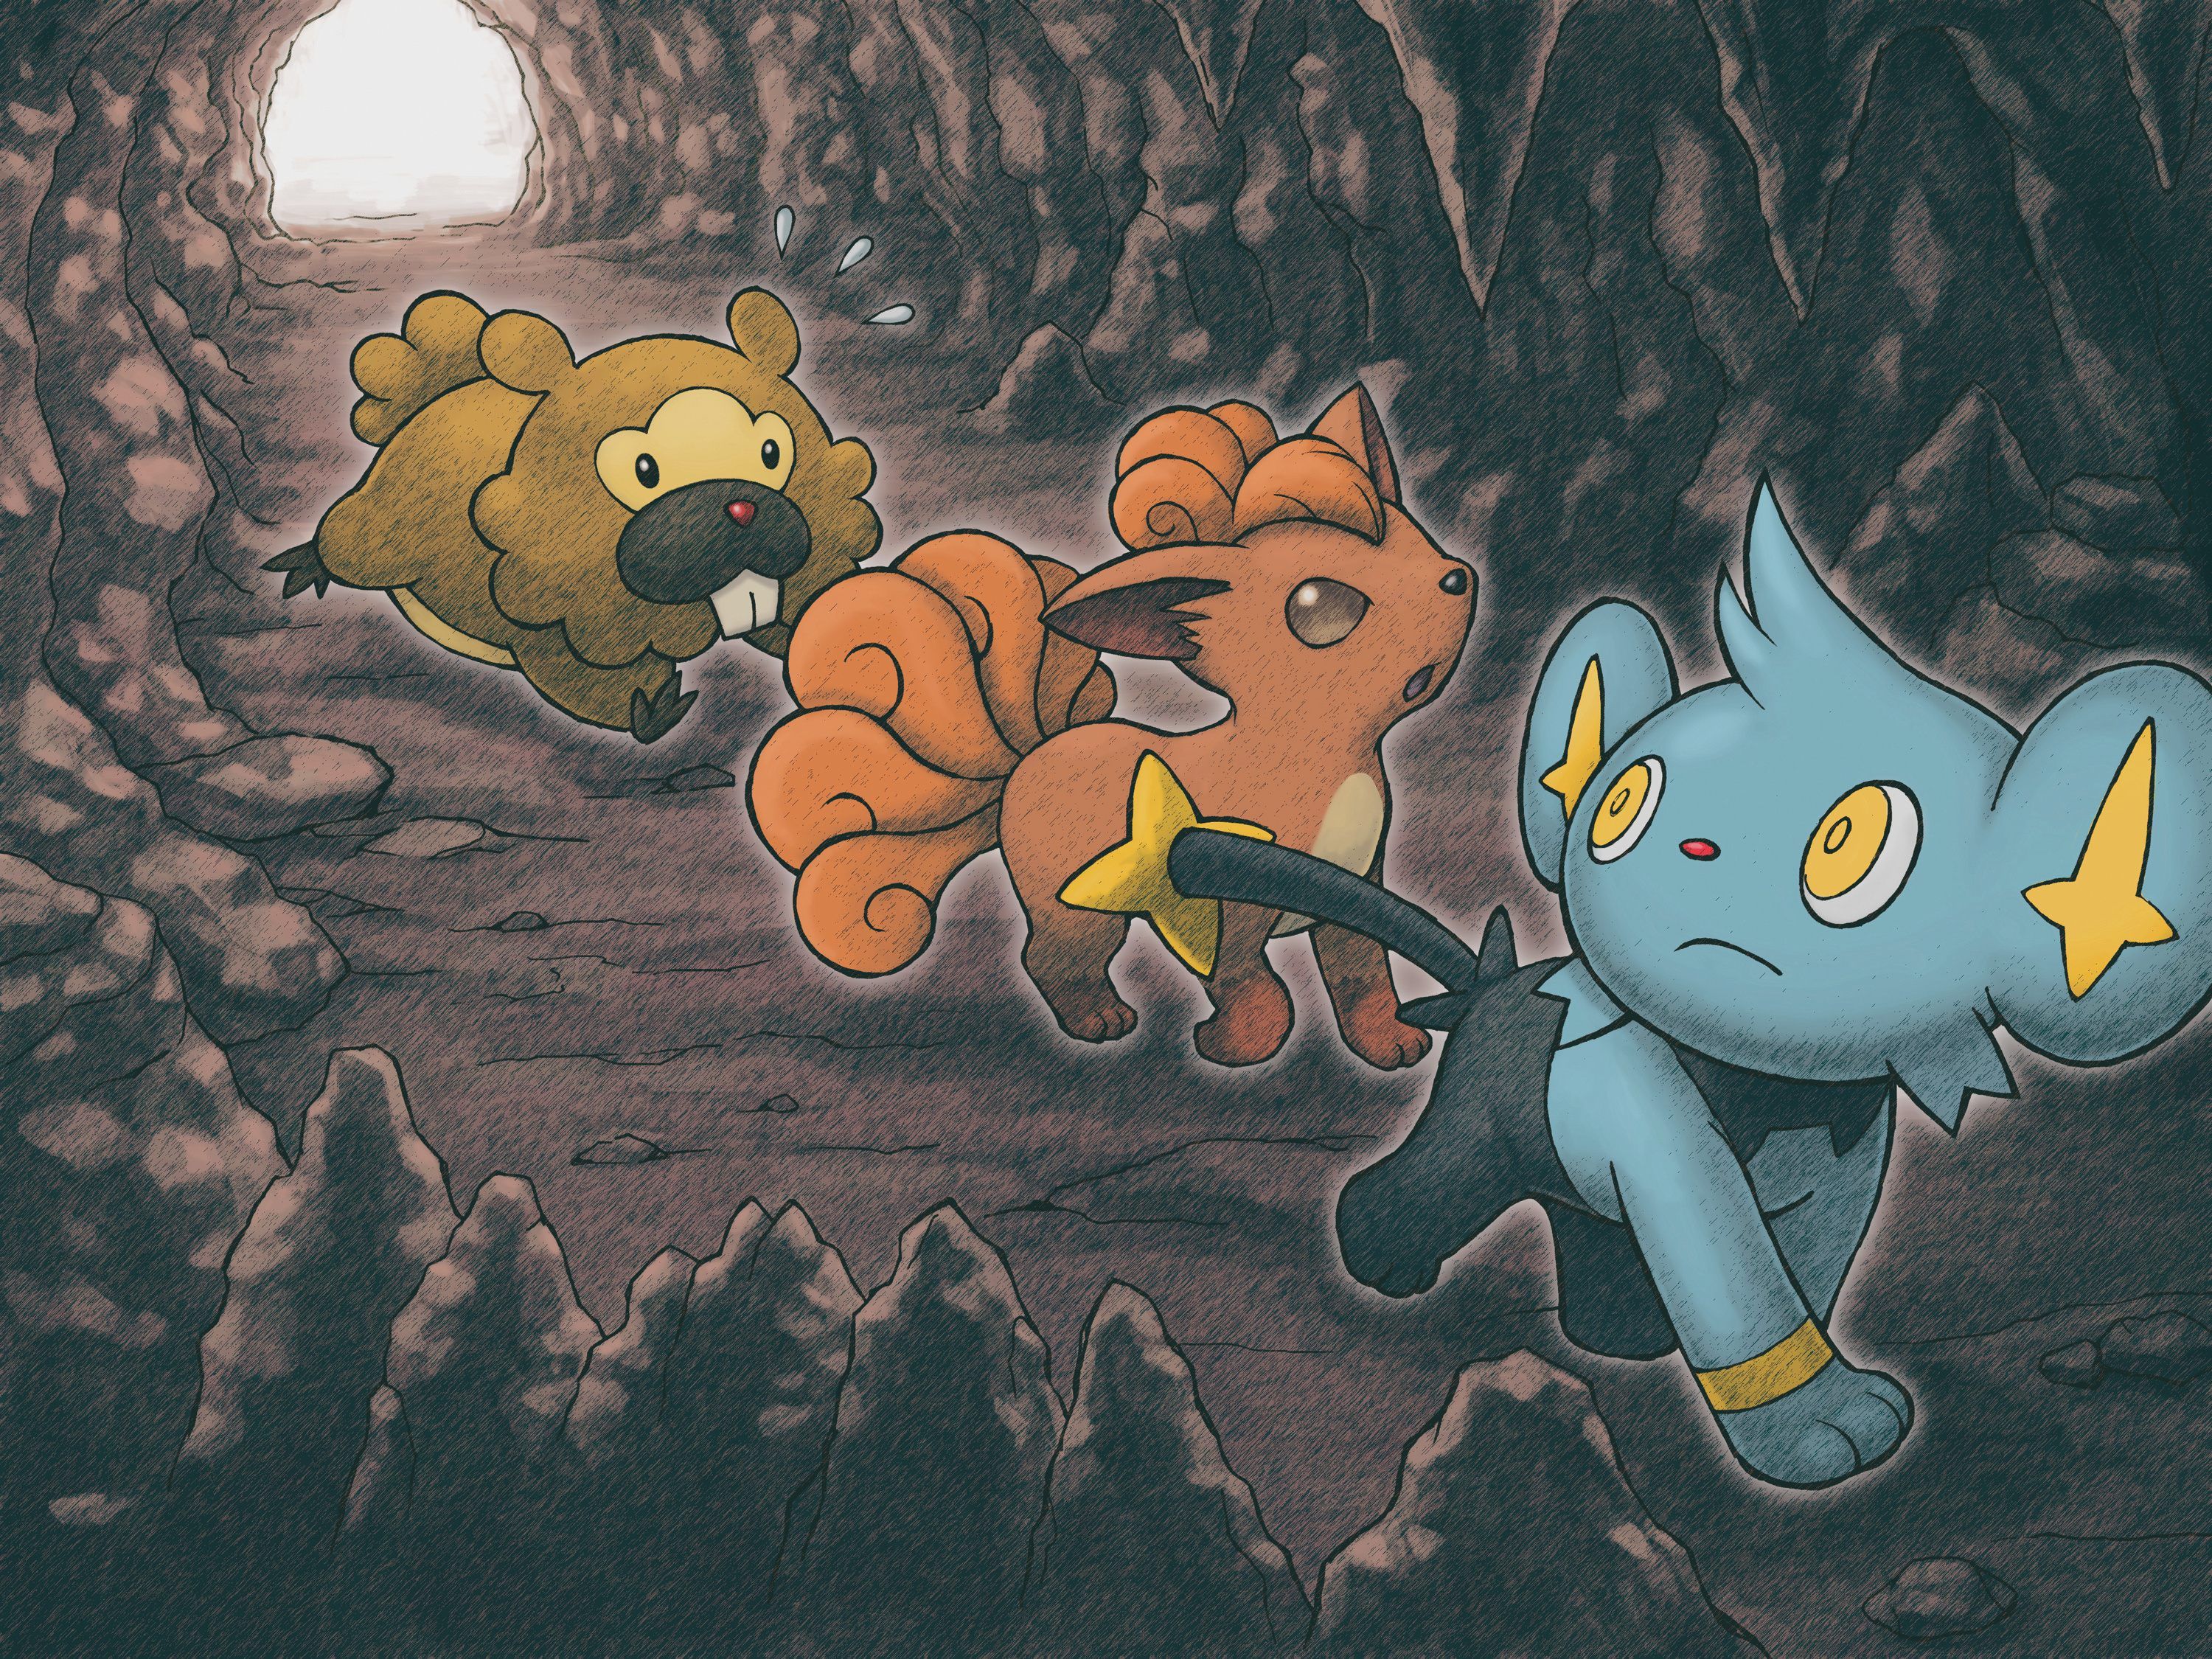 Shinx (Pokémon) HD Wallpaper and Background Image